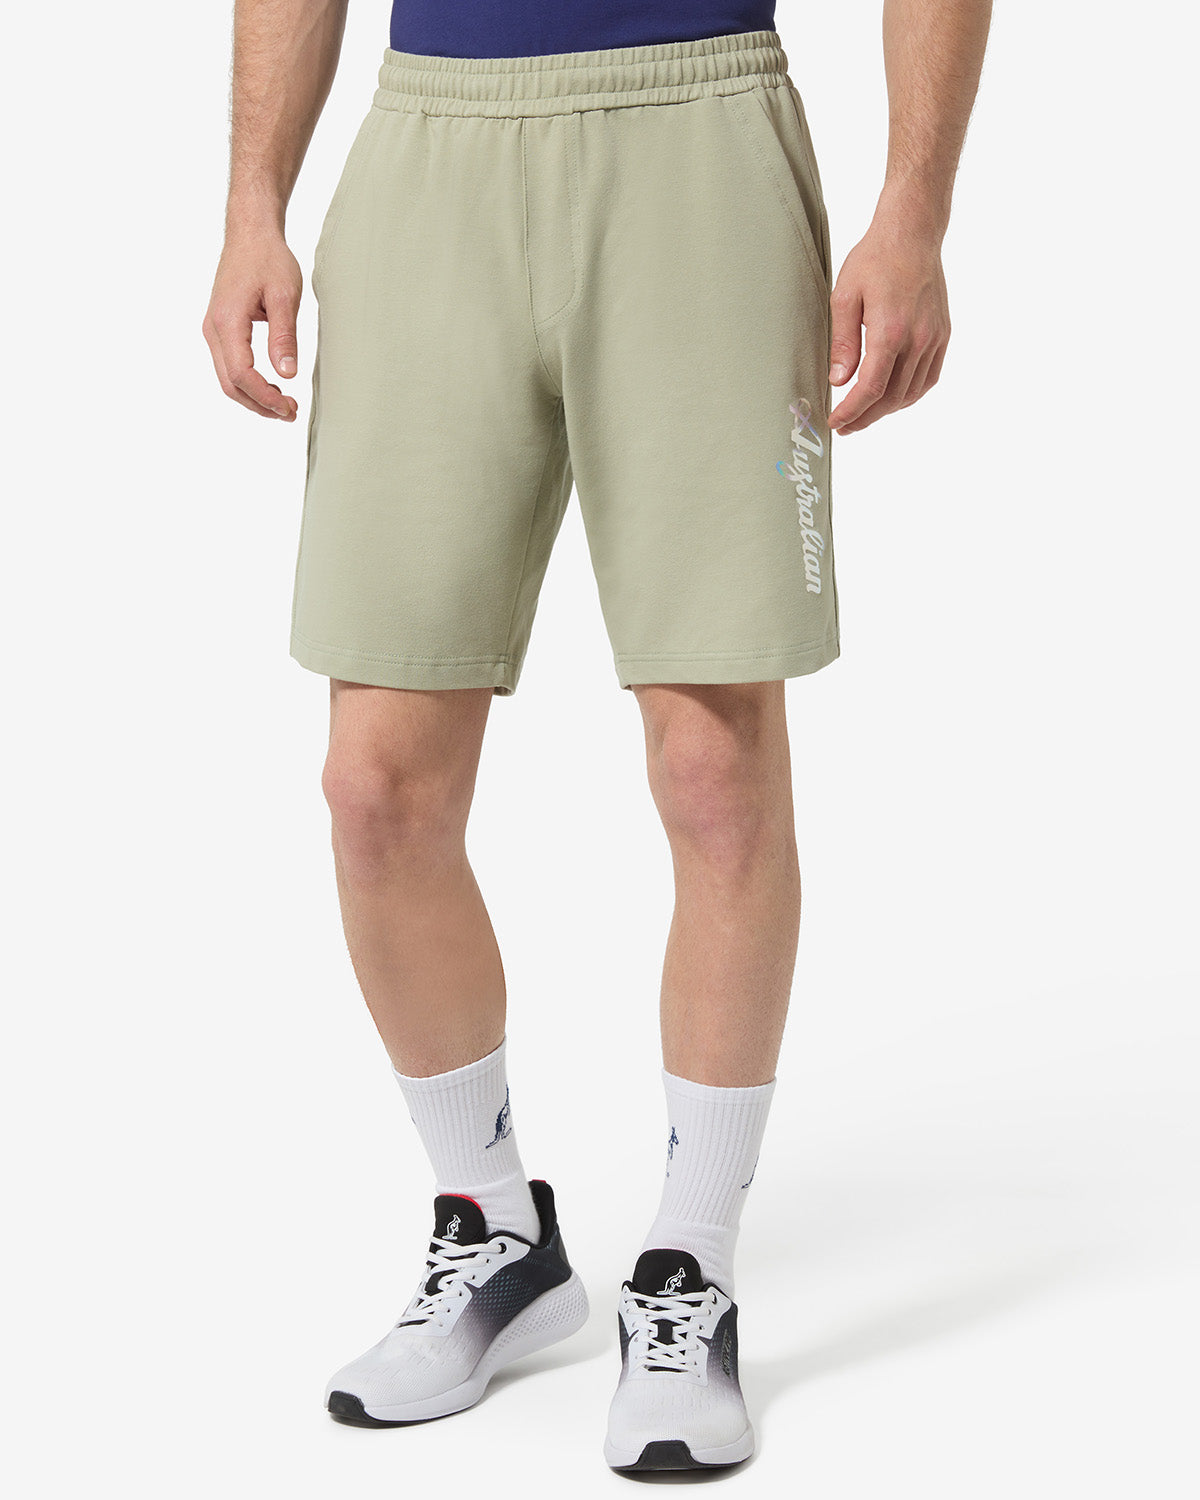 Urban Shorts: Australian Sportswear